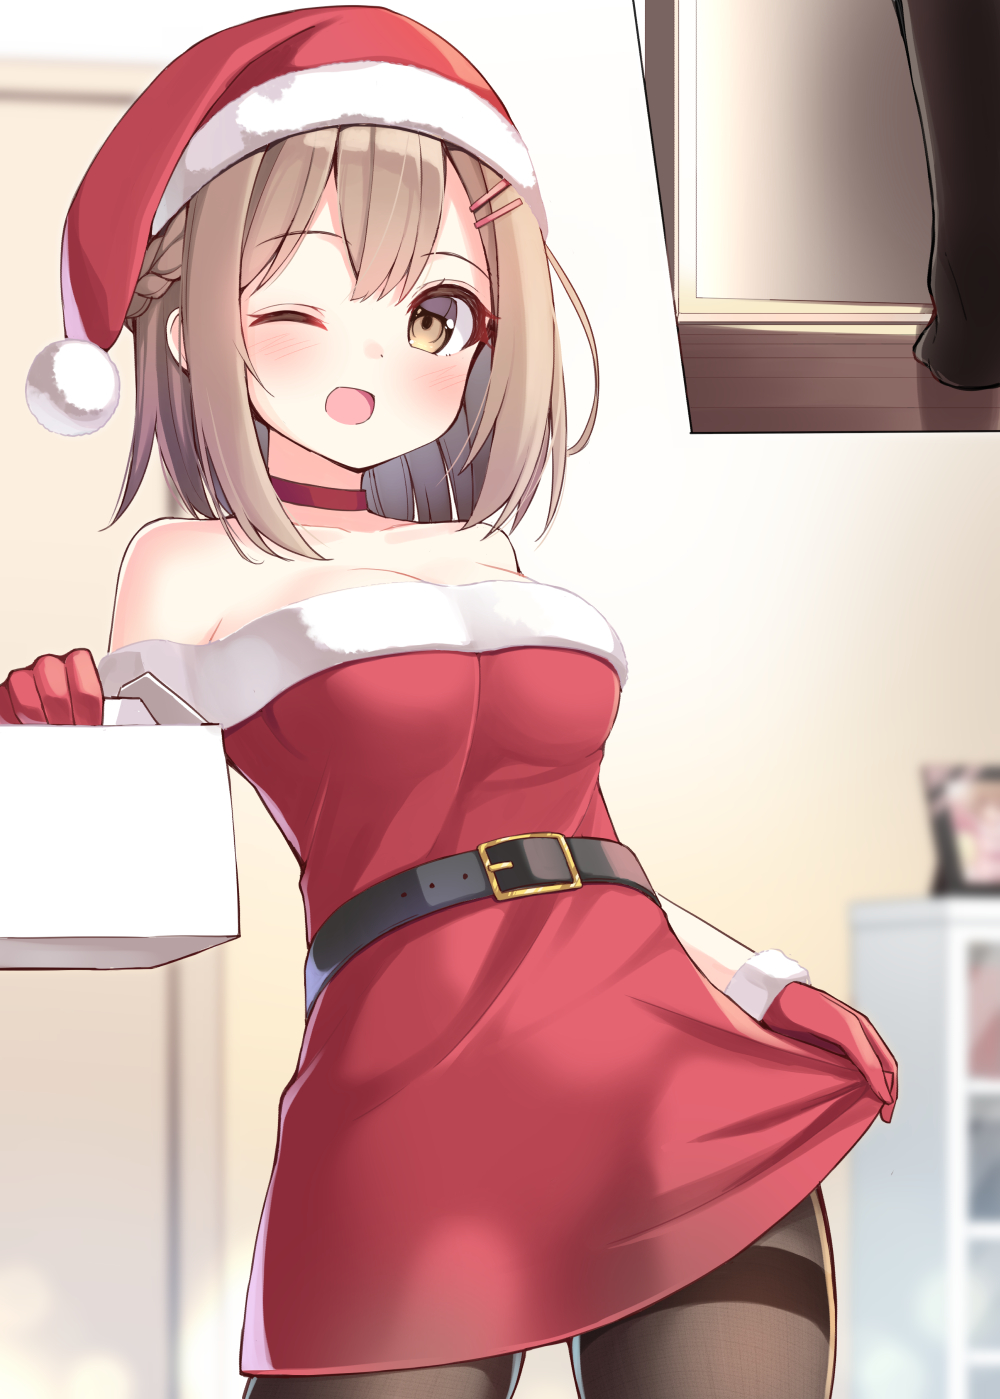 Anime 1000x1399 anime anime girls digital art artwork 2D portrait display Ominaeshi Christmas Santa hats Santa girl bare shoulders dress pantyhose wink brown eyes brunette short hair